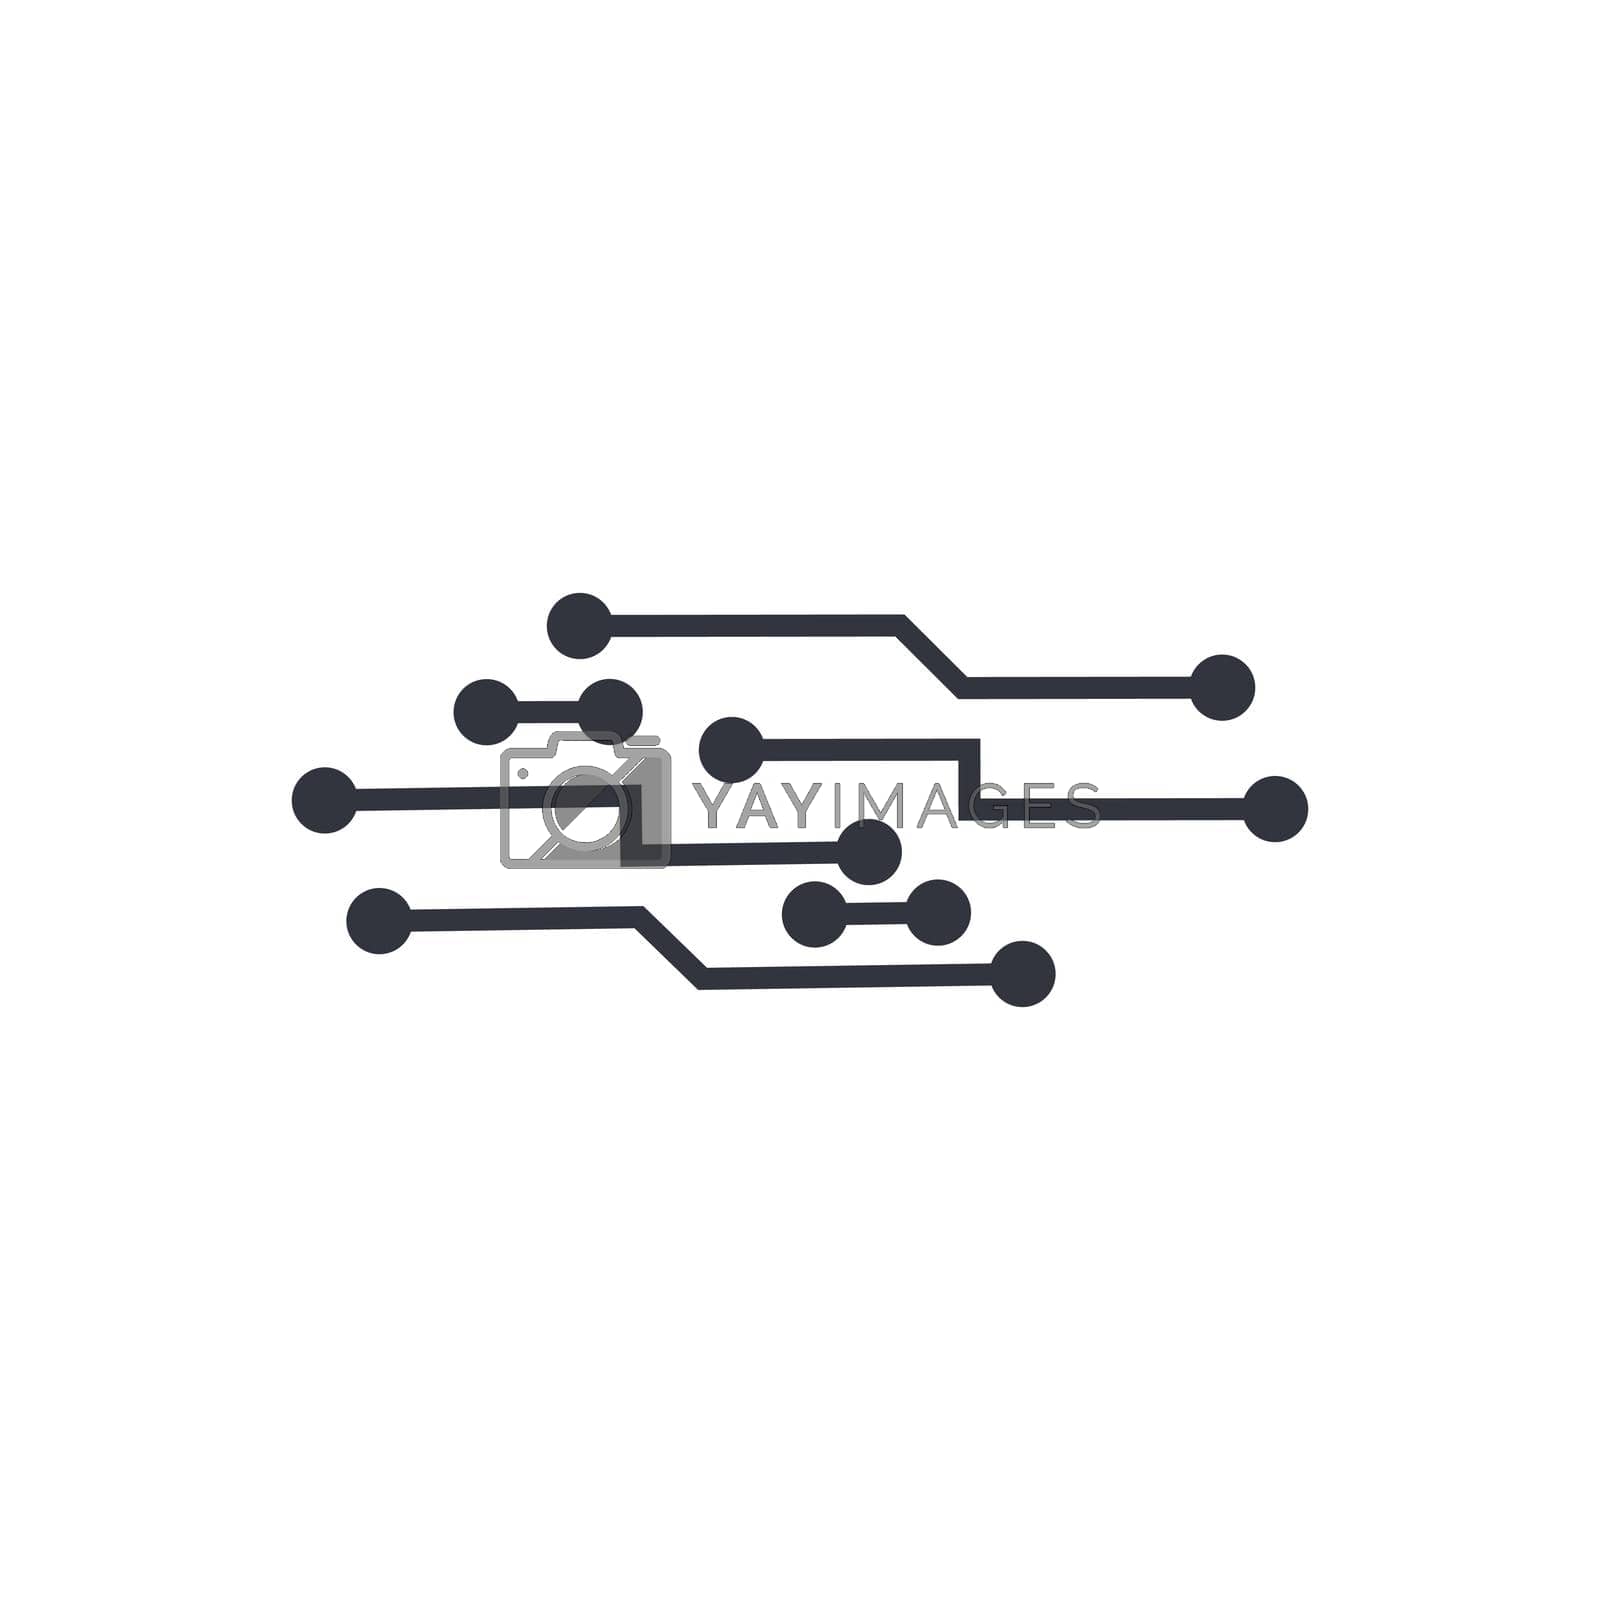 
Circuit technology logo vector template